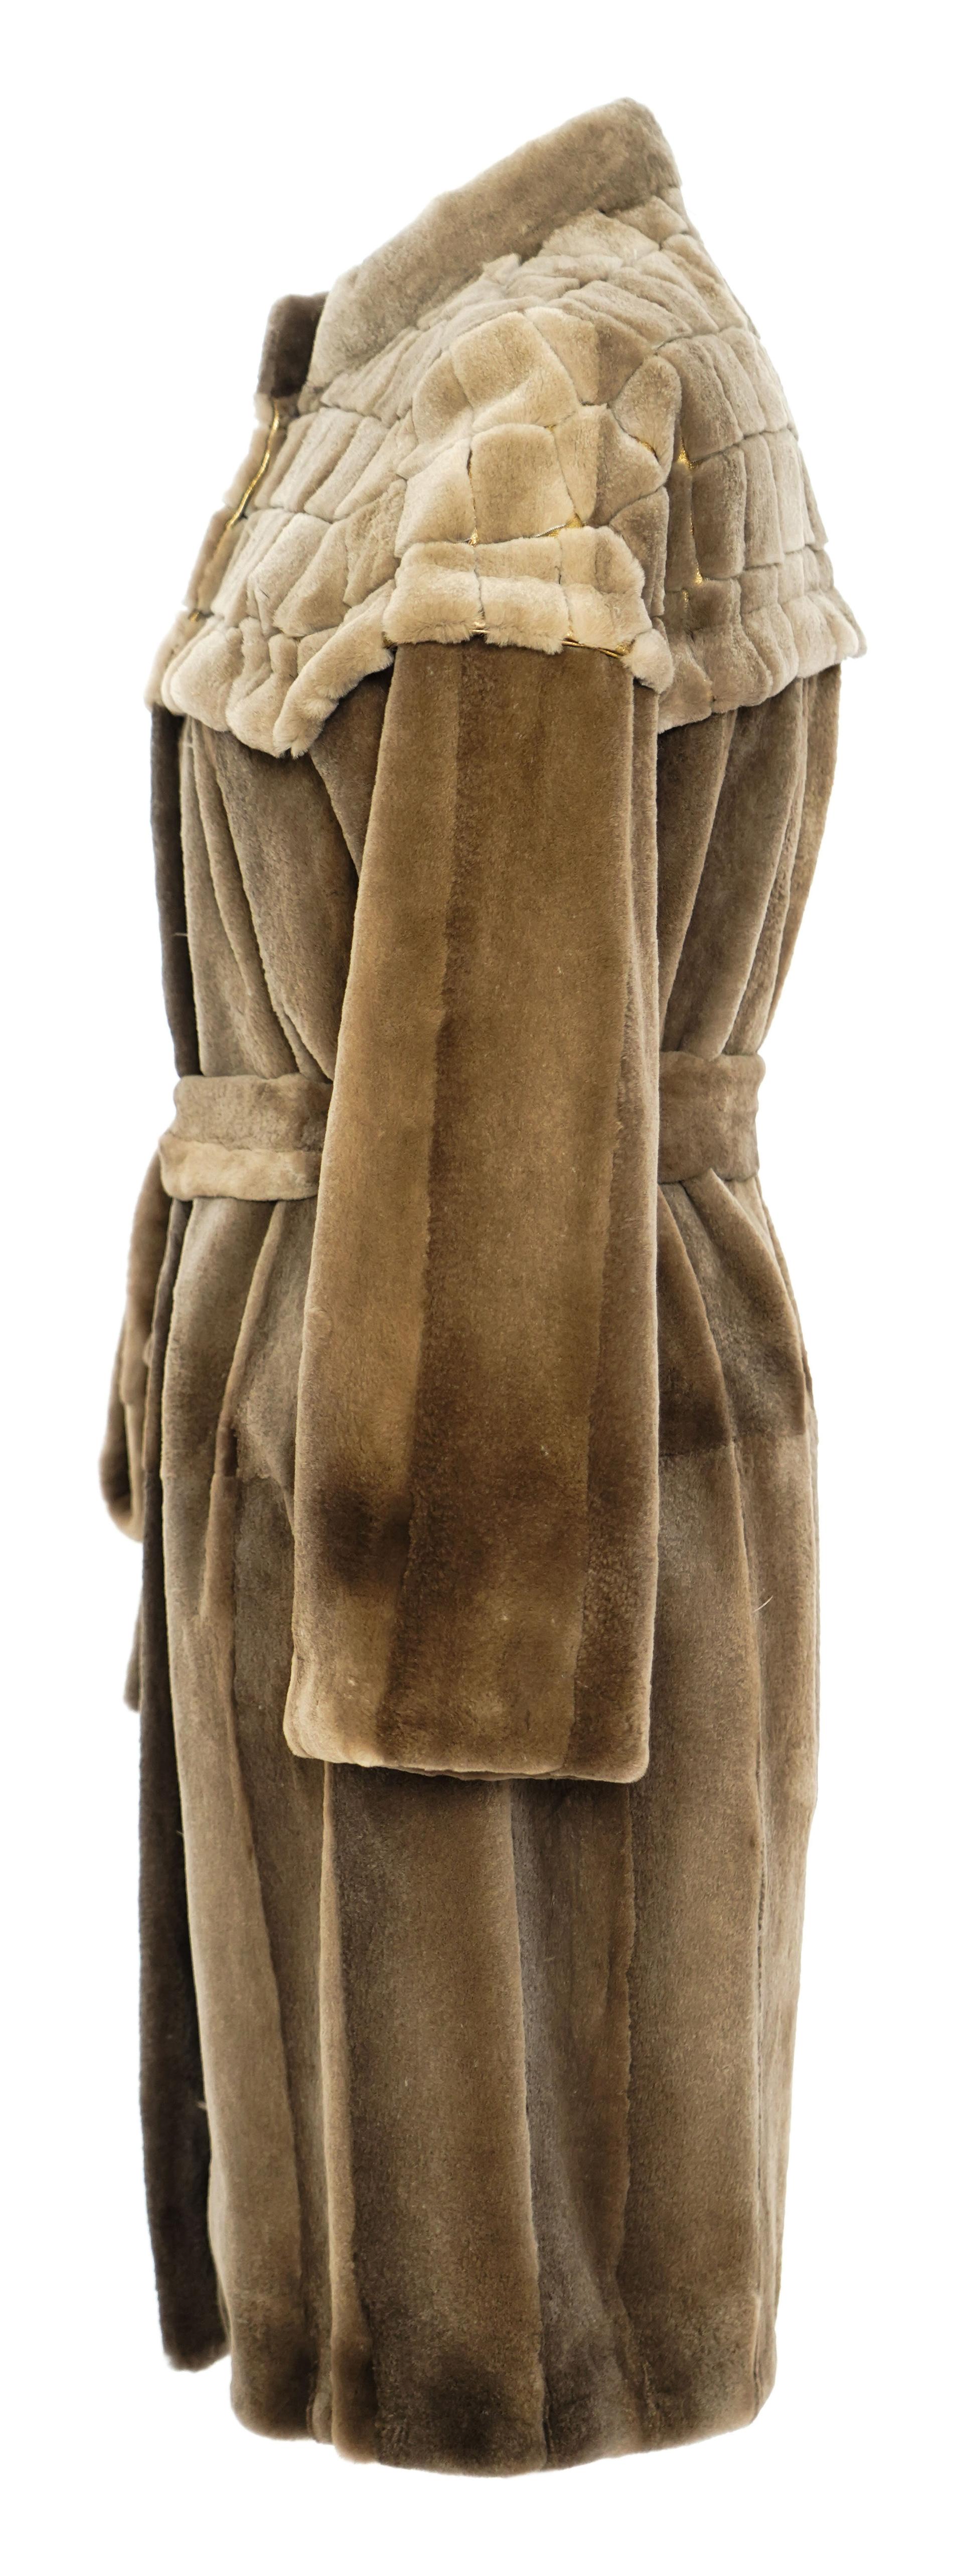 Shaved mink coat. 100% silk detachable lining..
Color: natural brown.